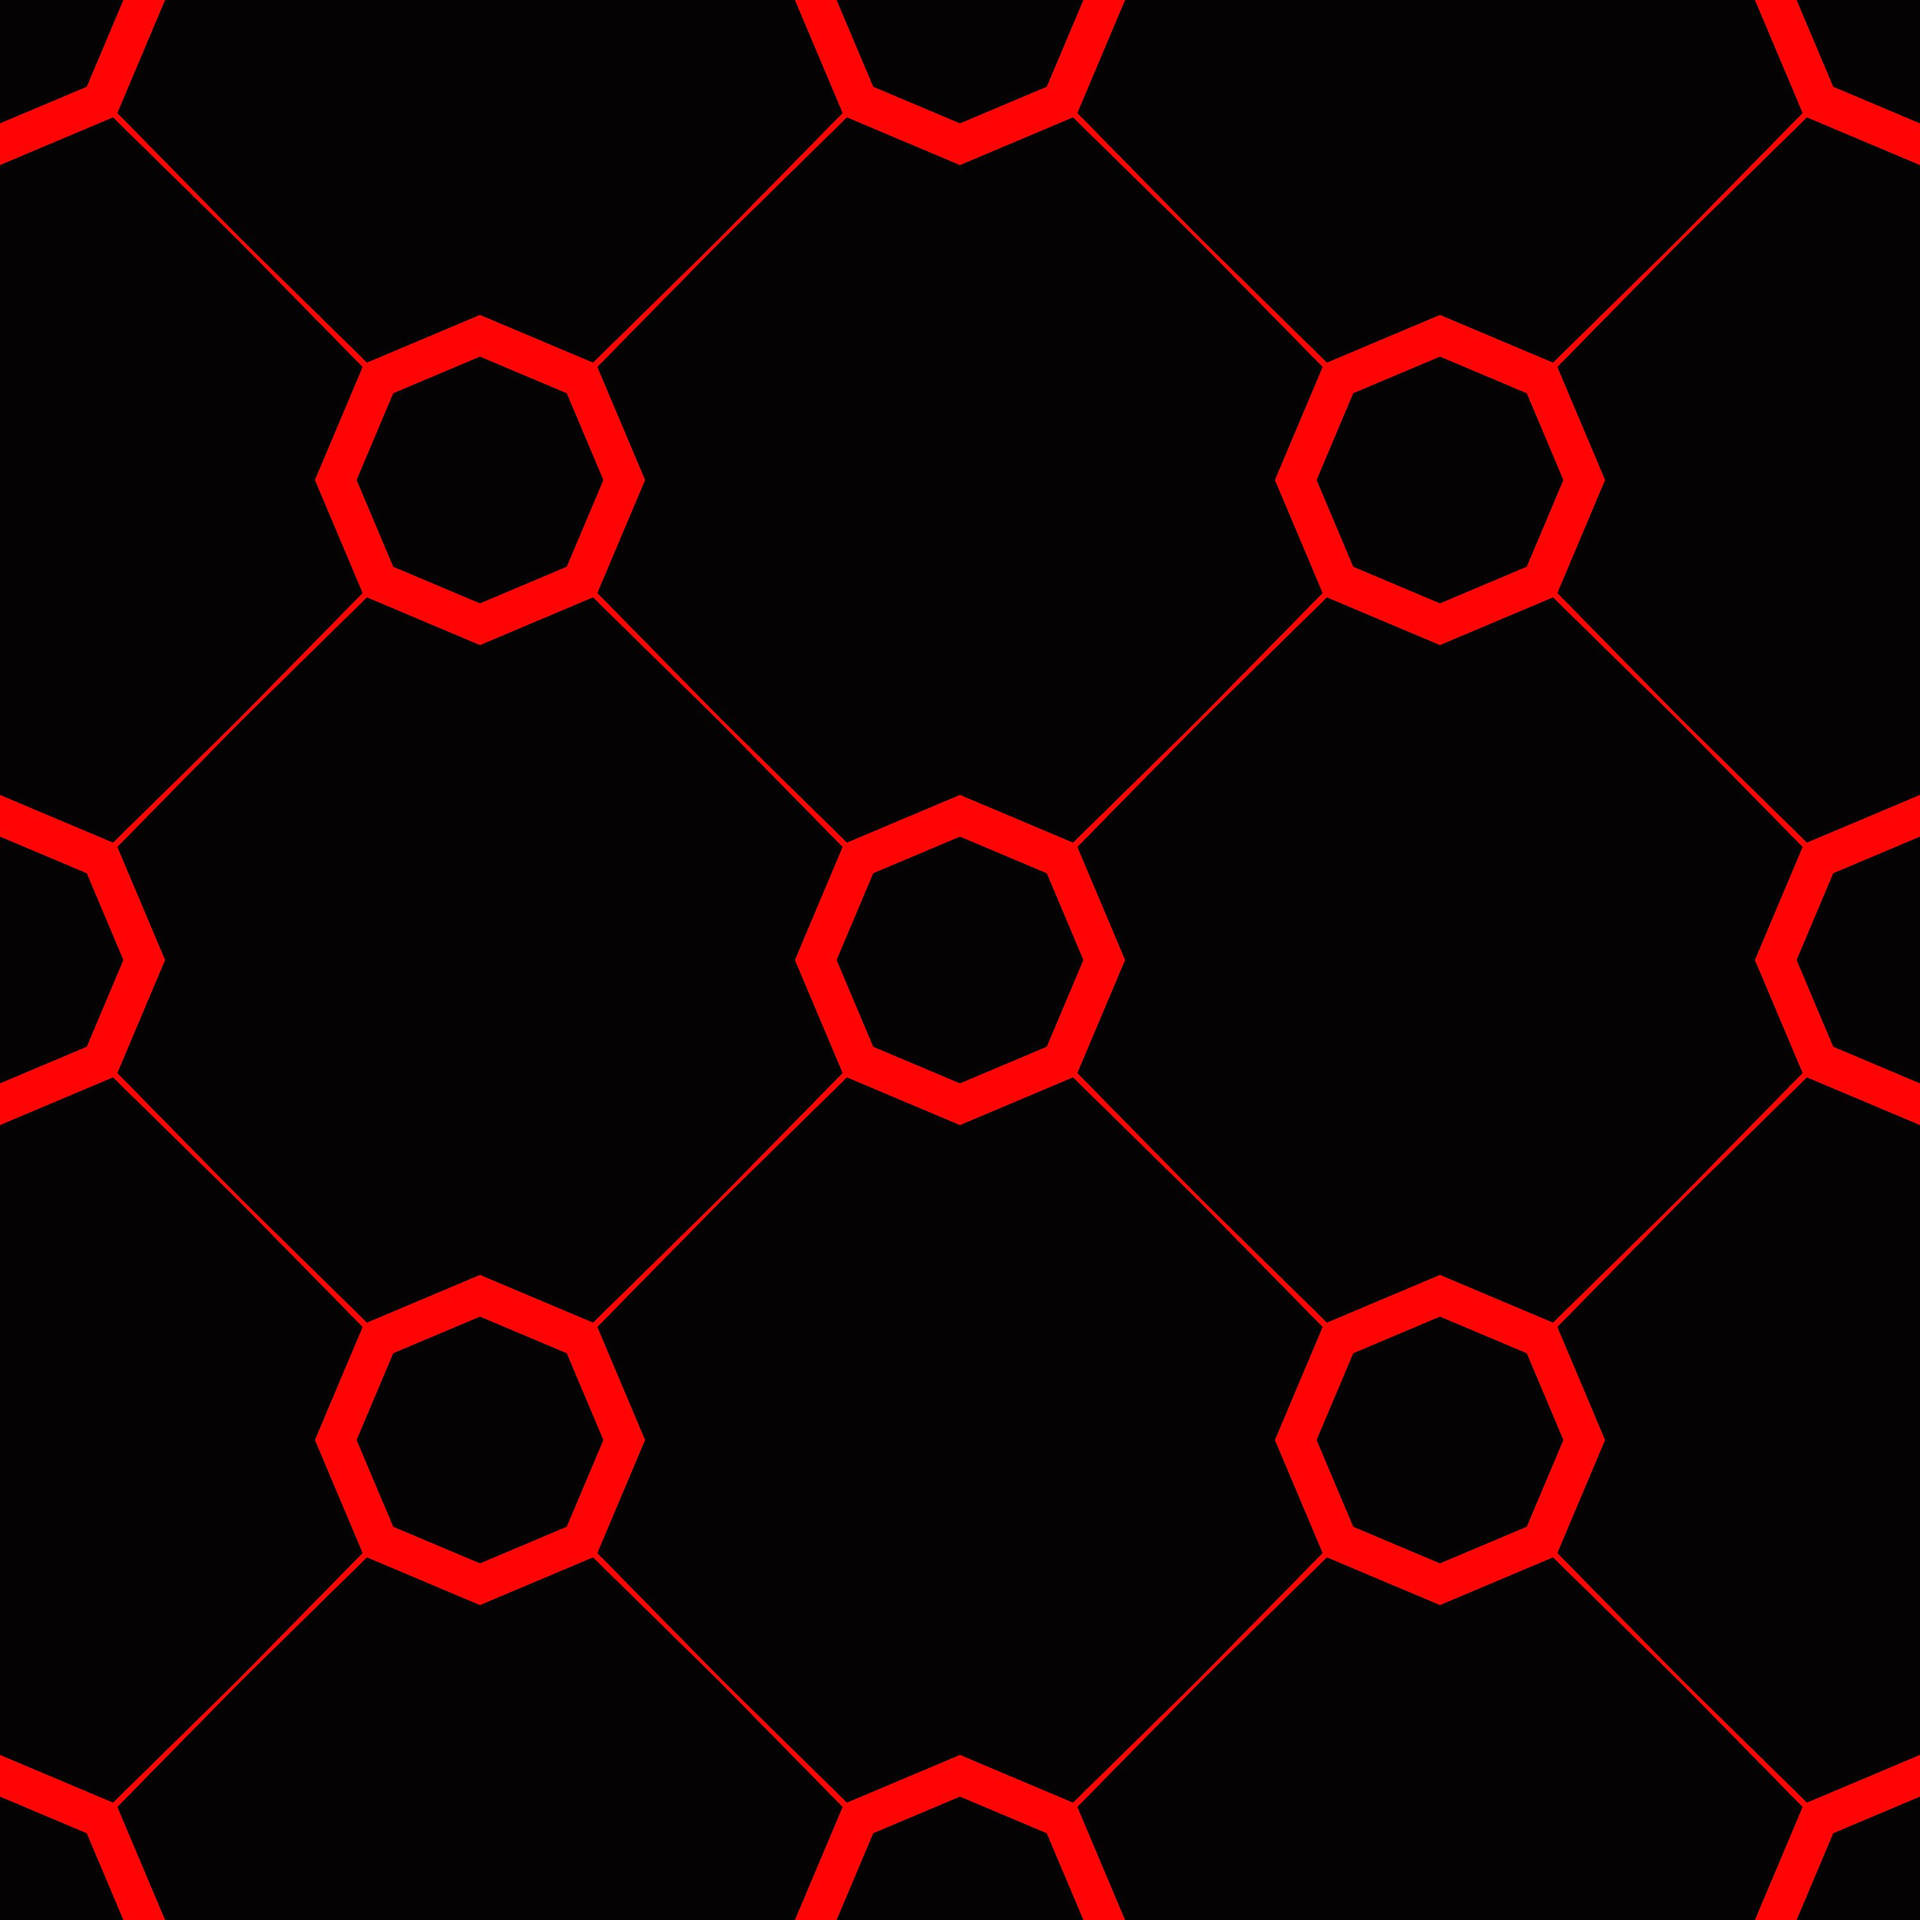 Red Circle Honeycomb Wallpaper